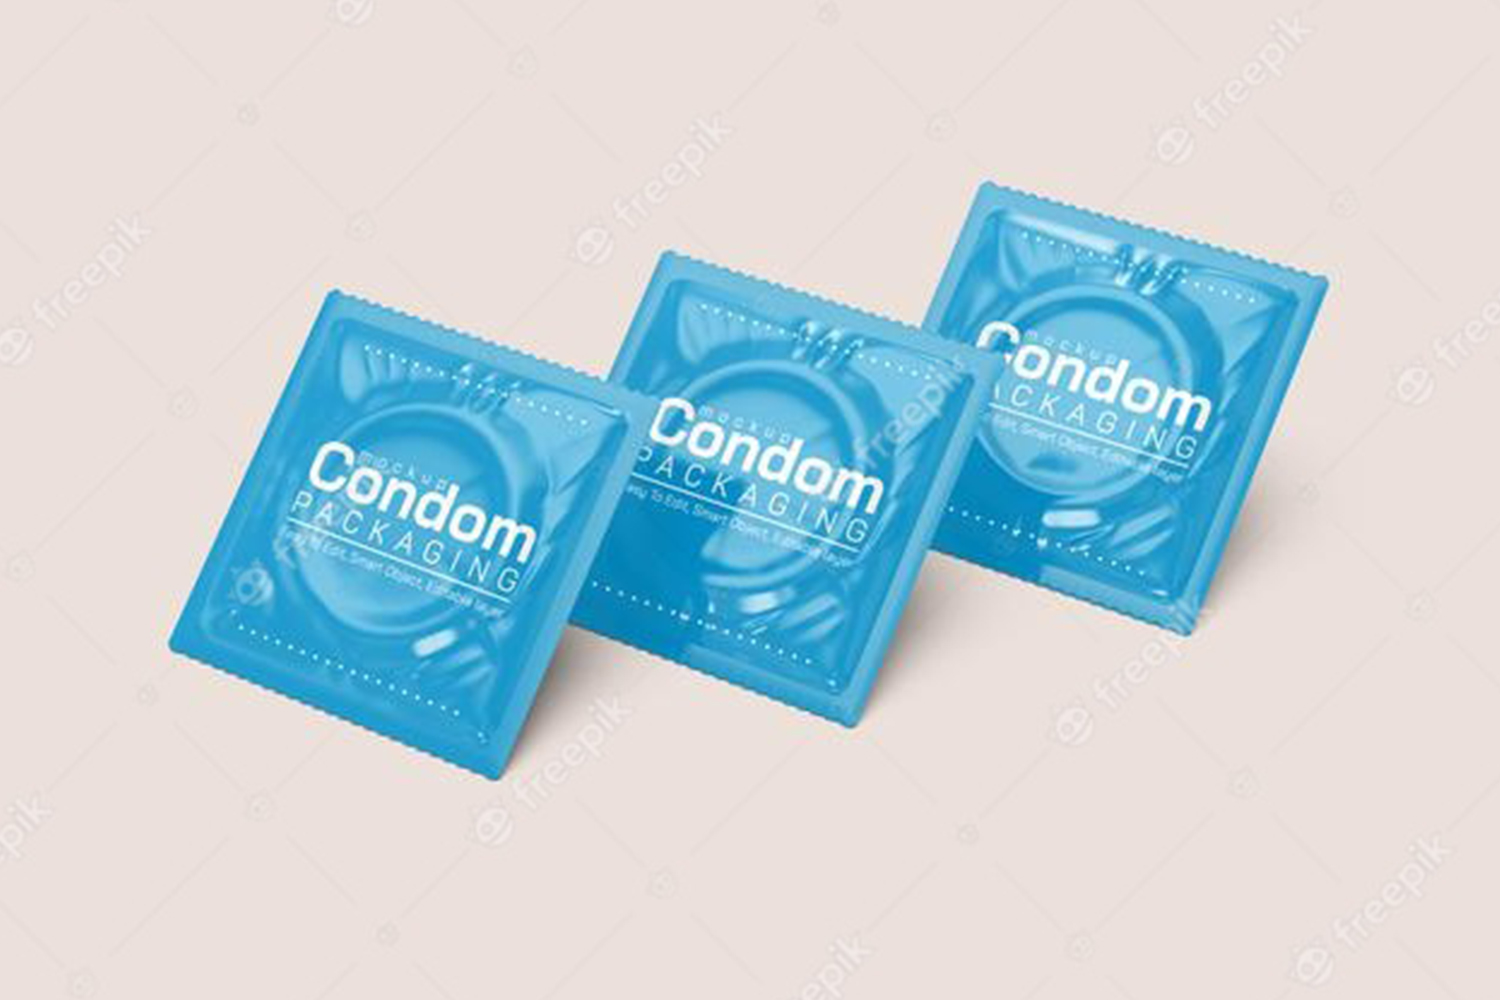 Condom packet packaging mockup Mockup Free Download